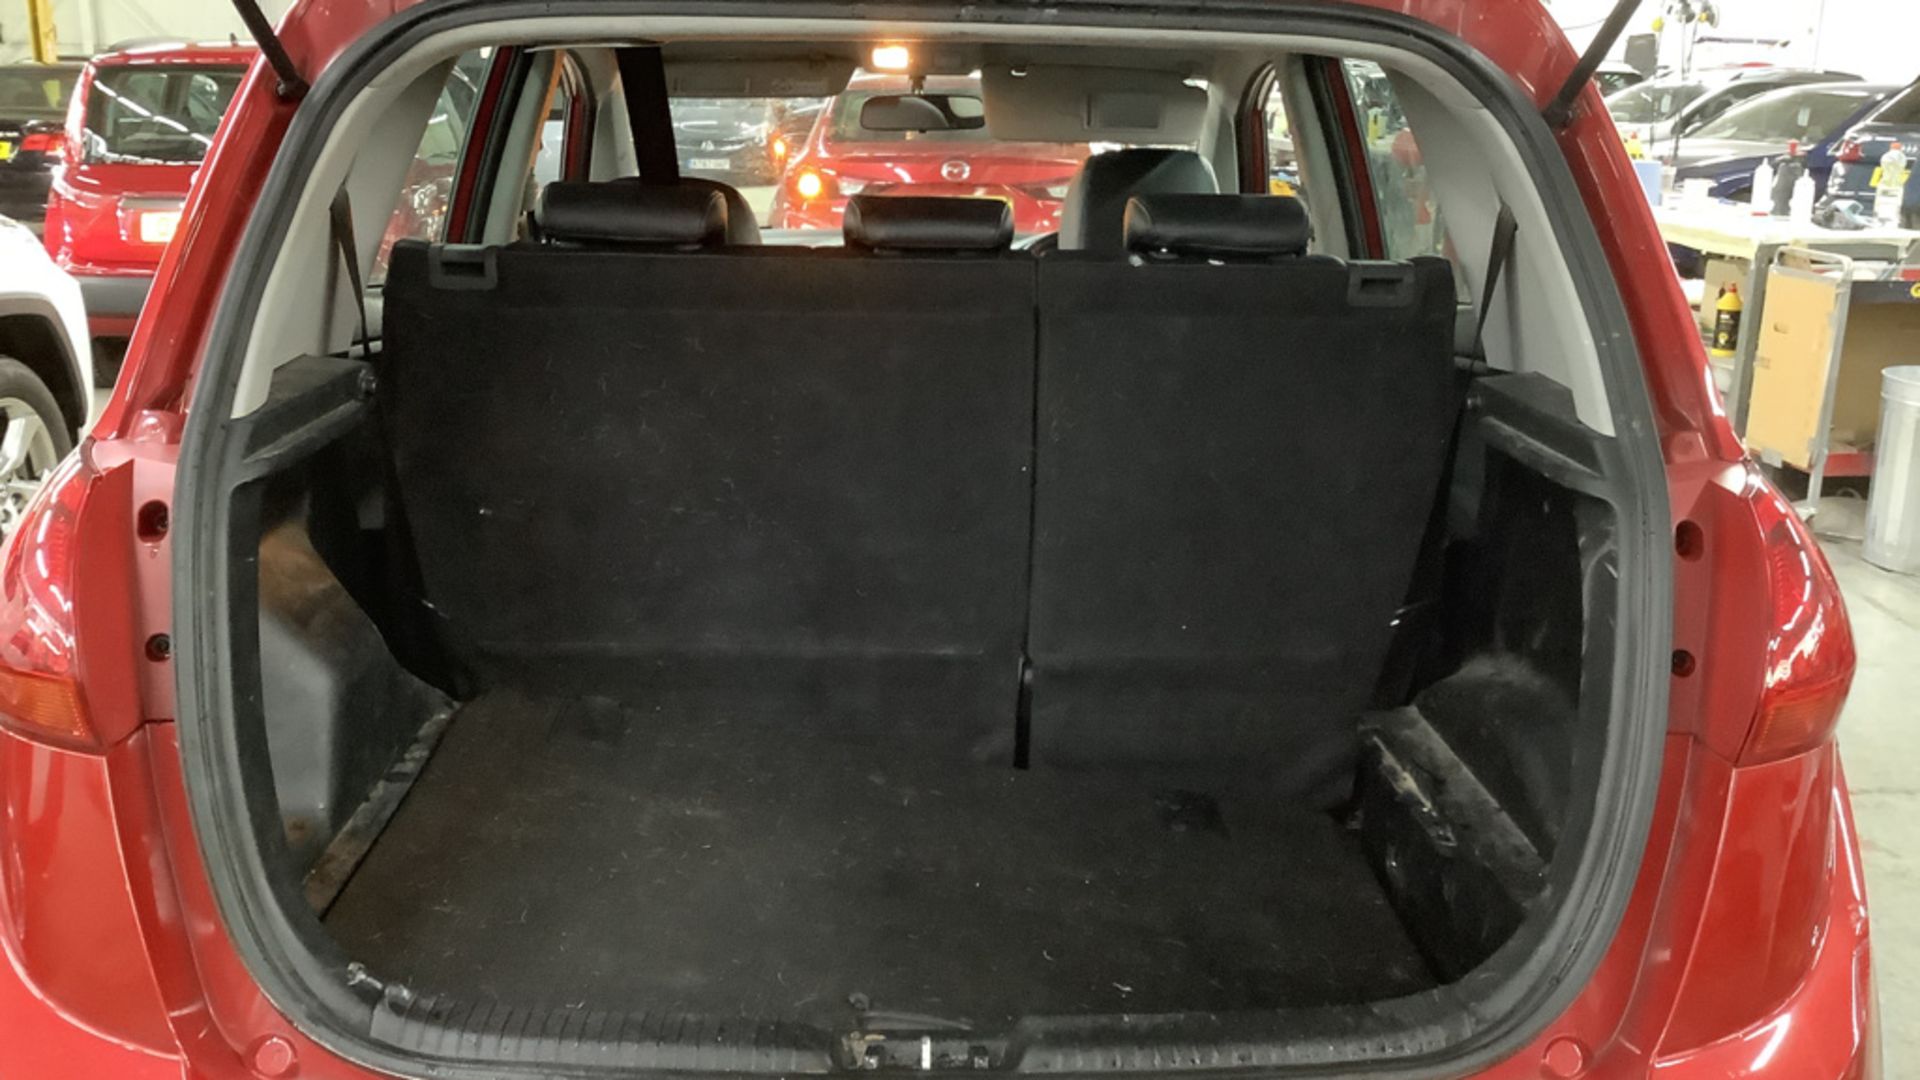 ** ON SALE ** KIA Venga 1.6 3 ISG Hatchback 2019 '19 reg' ULEZ Compliant - Only 25268 Miles - Image 5 of 9